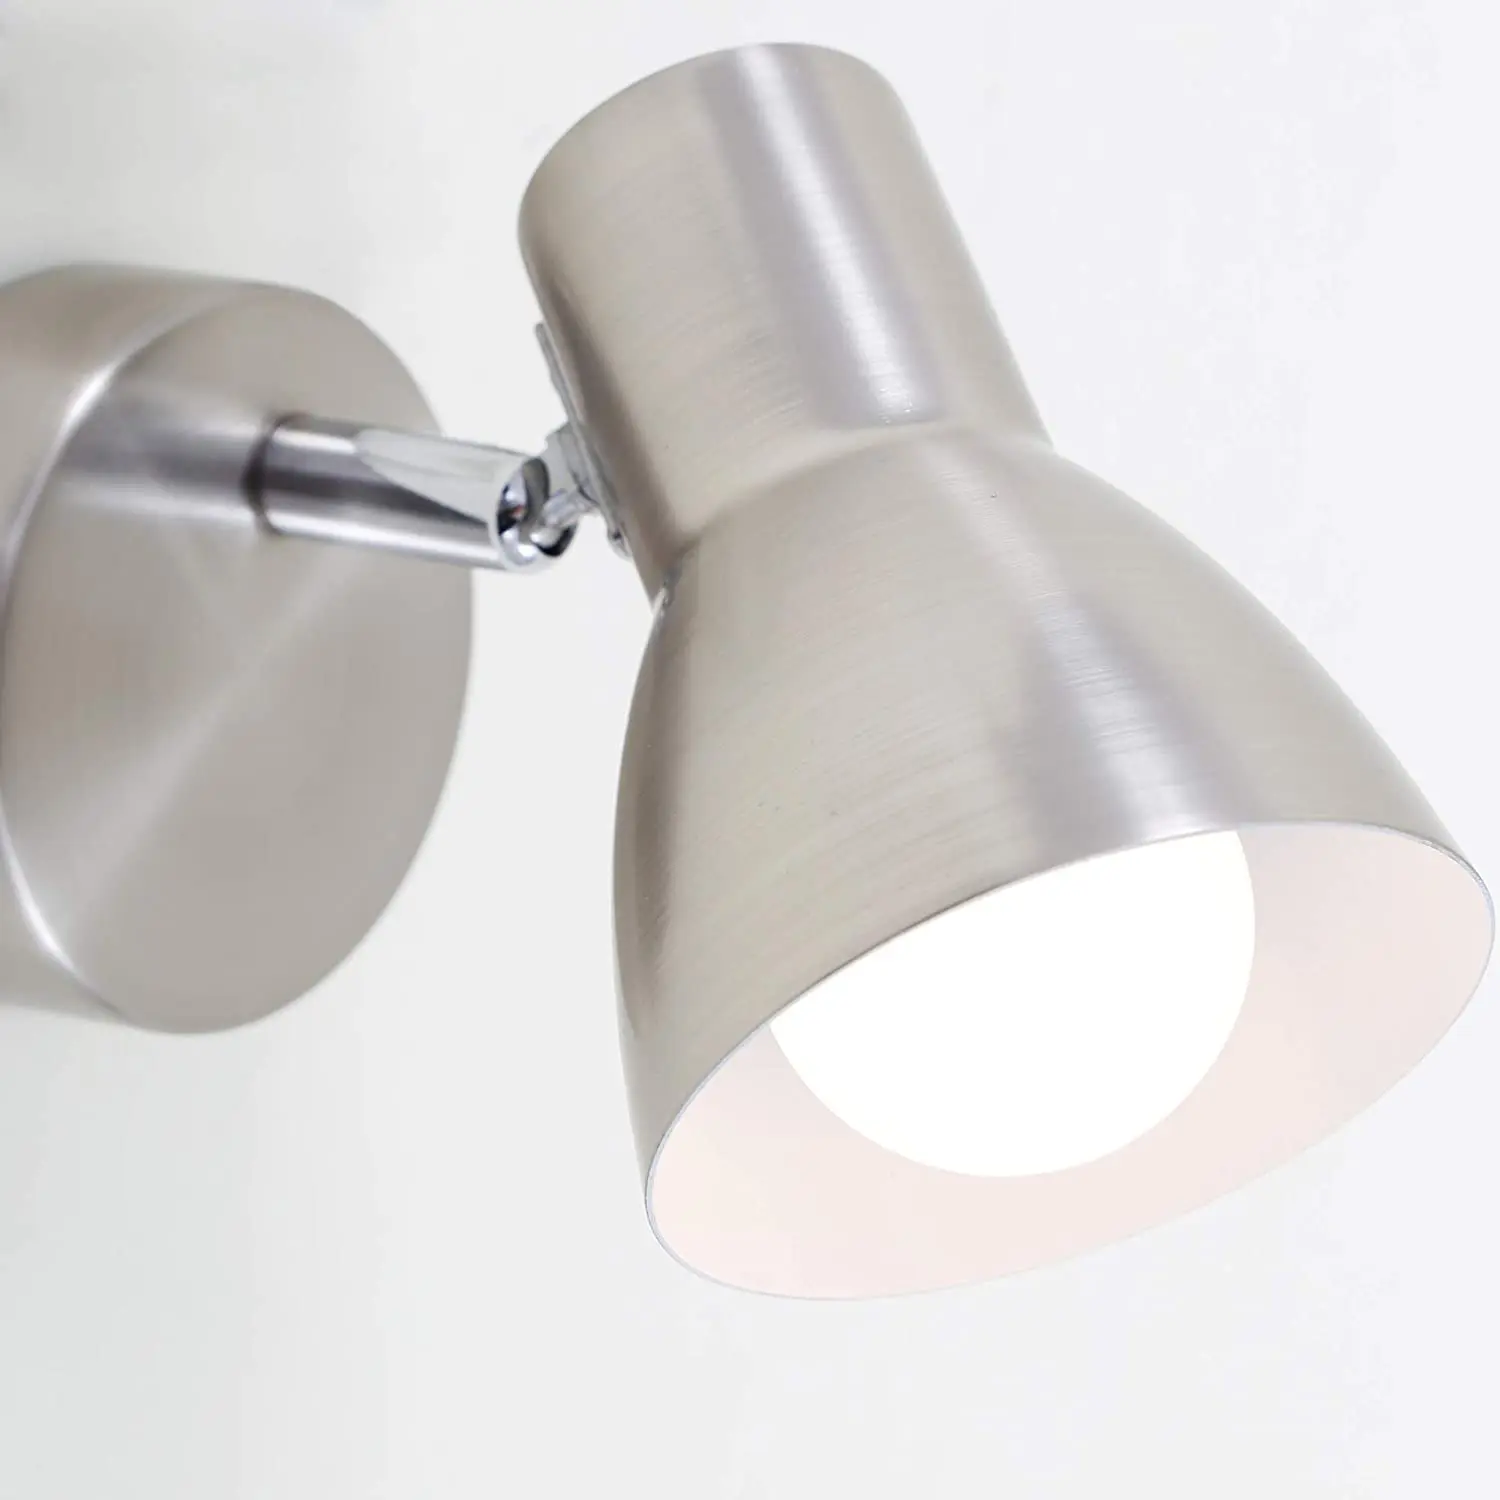 New innovative product dimmable led spot light led waterproof lights spot